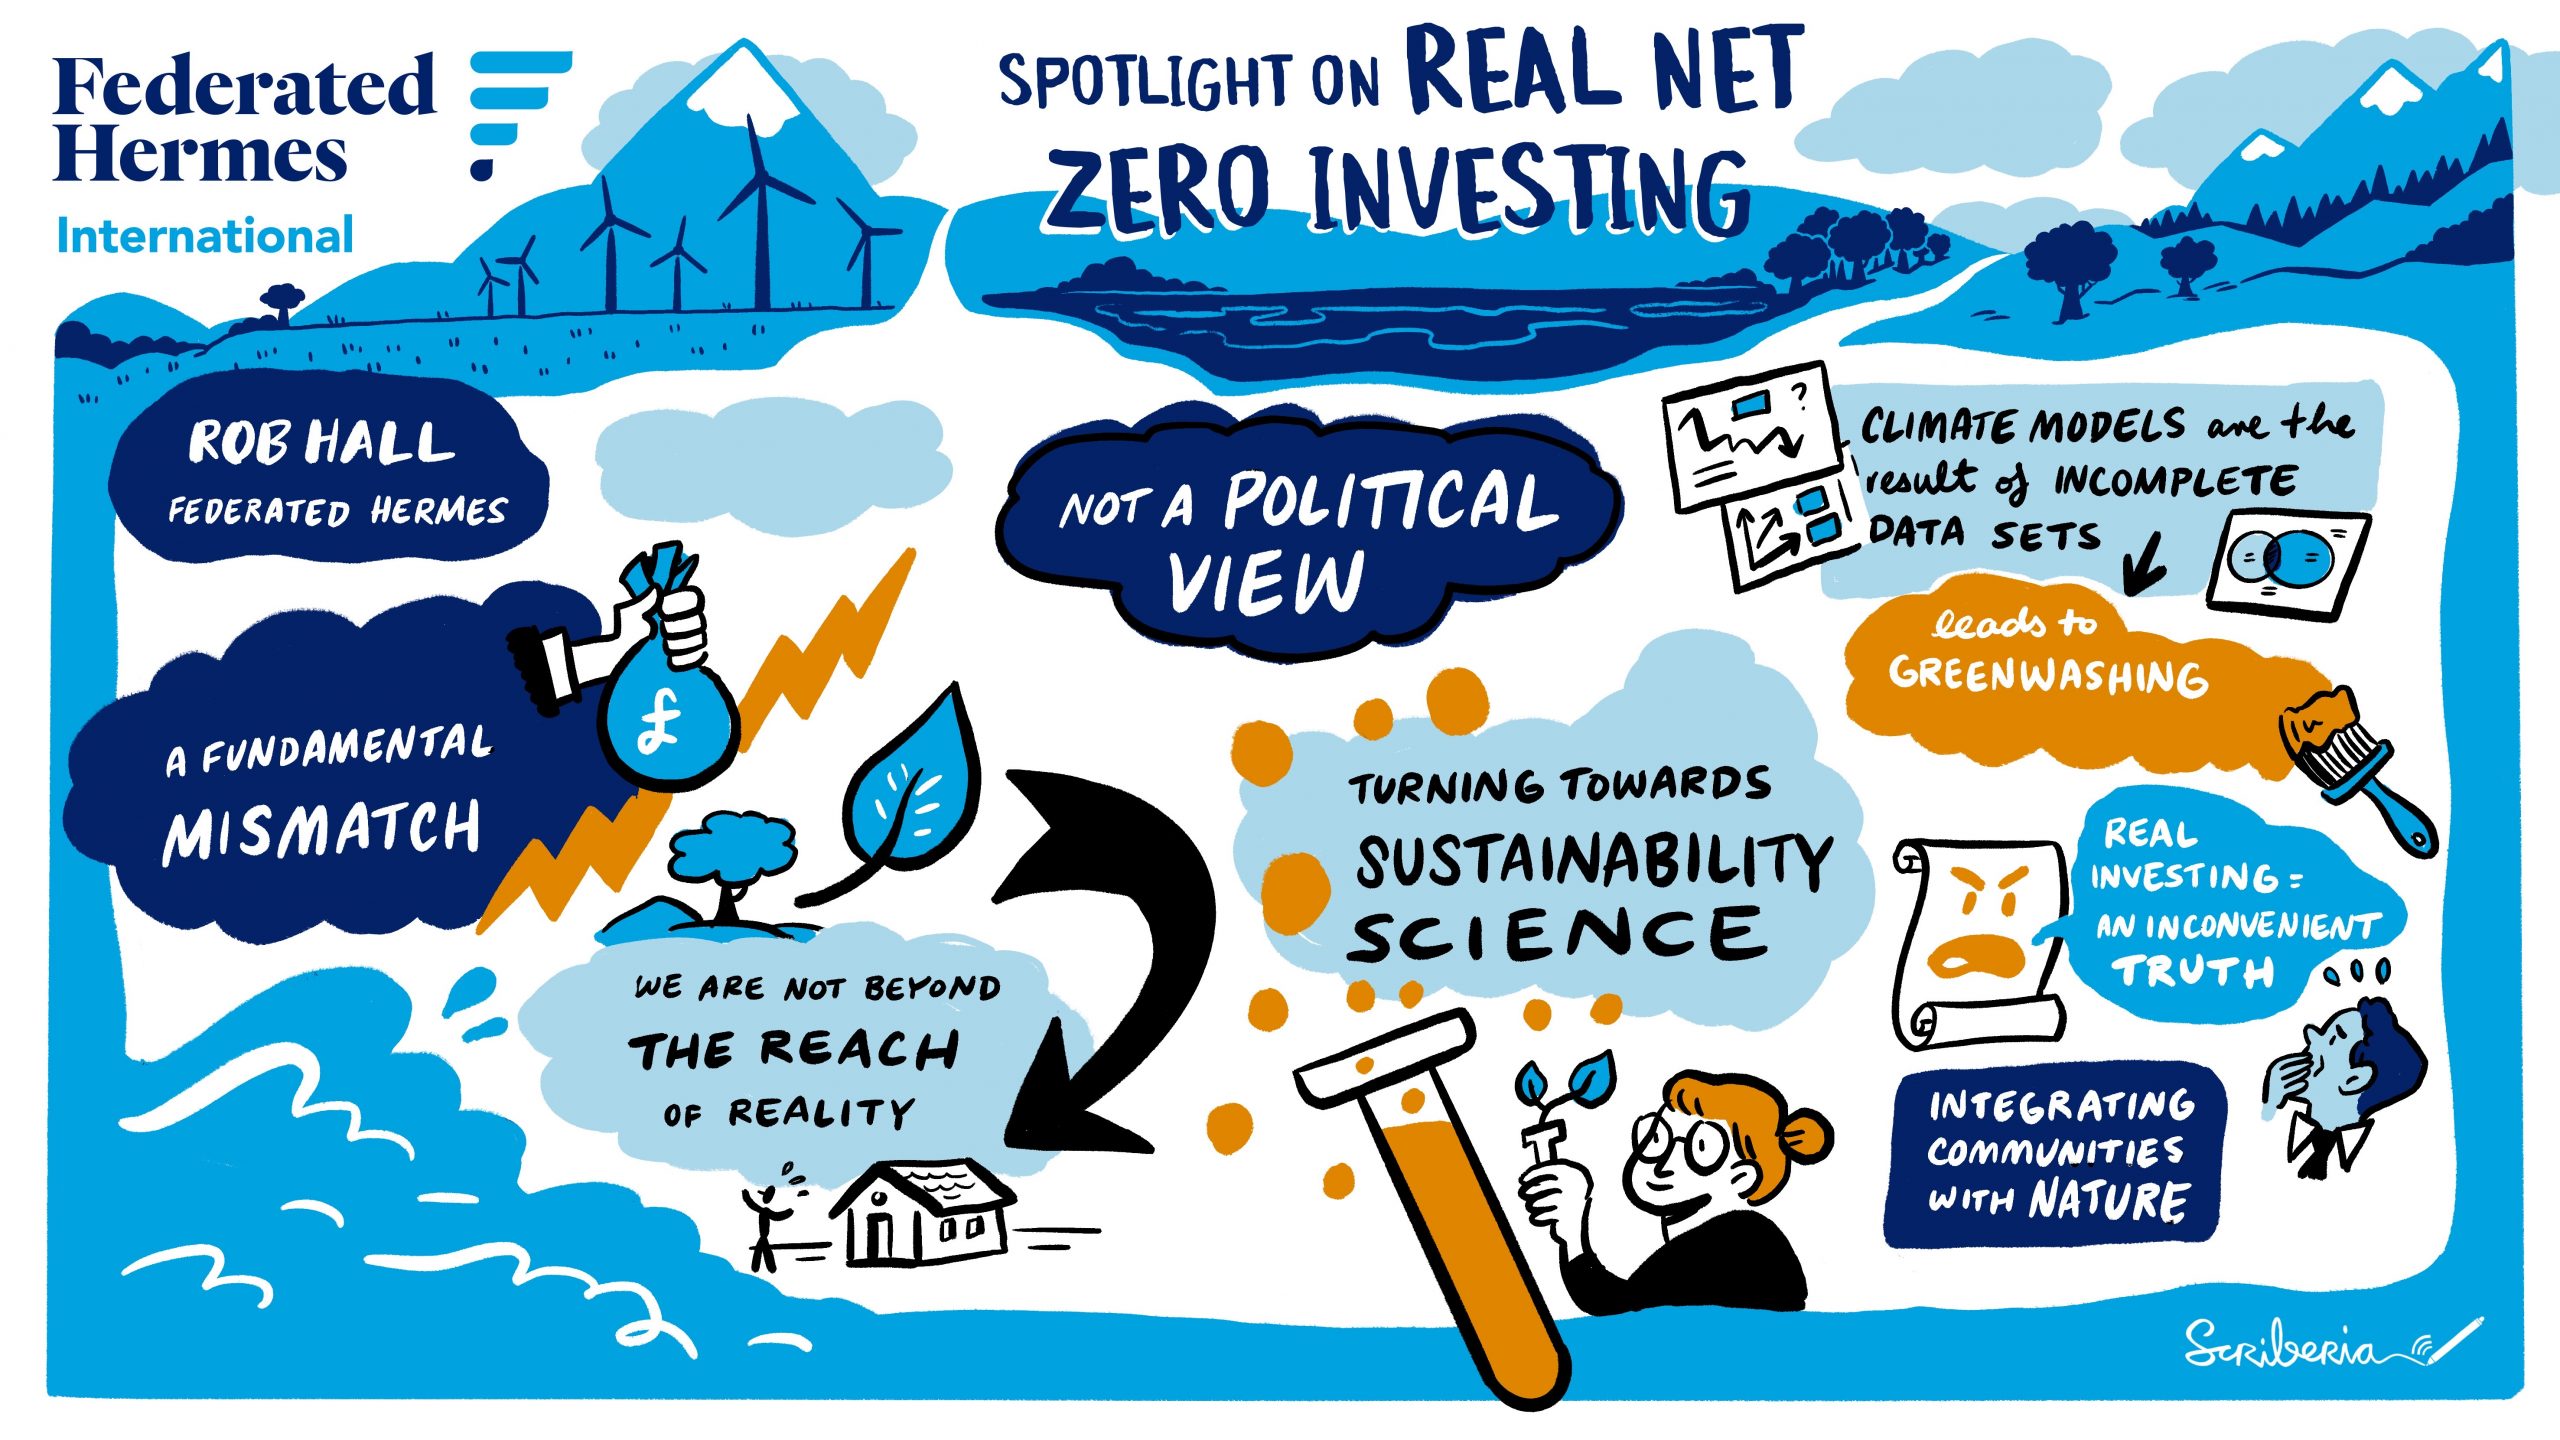 Real net zero investing infographic